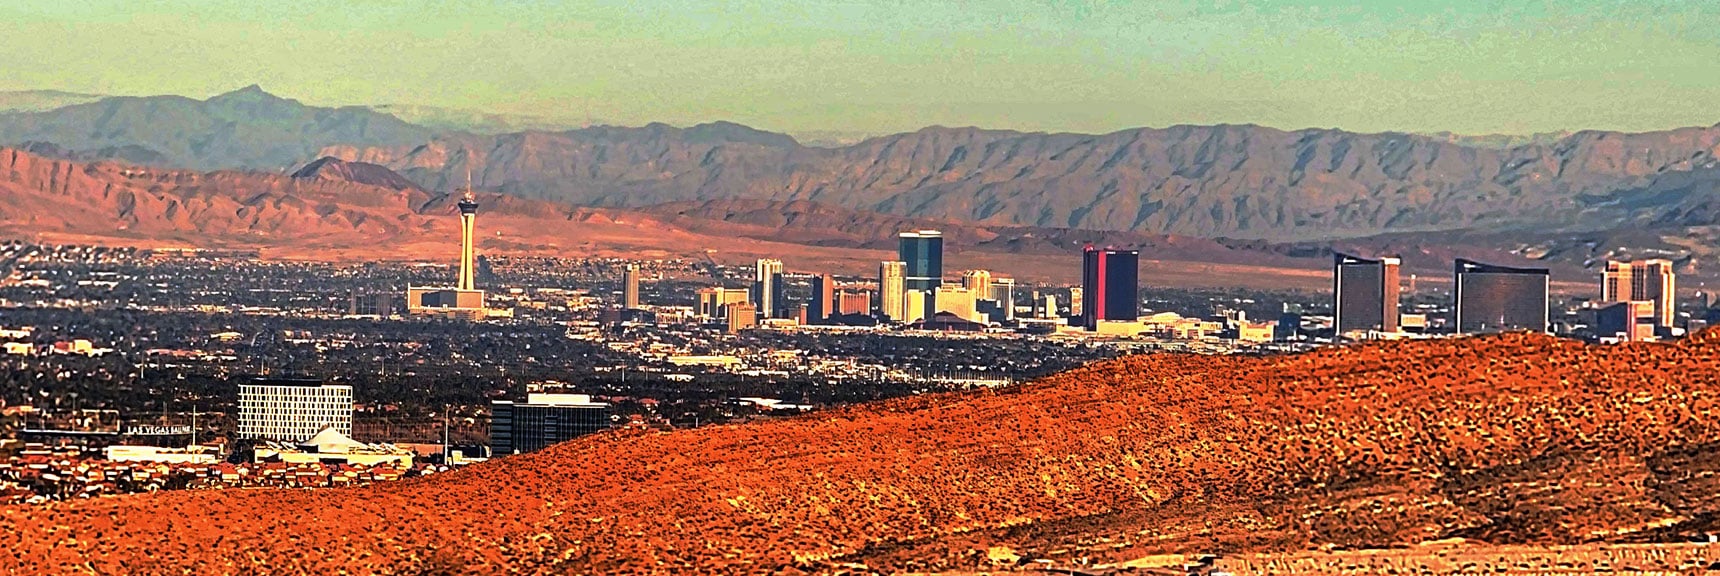 Zoom in on Vegas Strip! | Brownstone Trail | Calico Basin | Brownstone Basin | La Madre Mountains Wilderness, Nevada